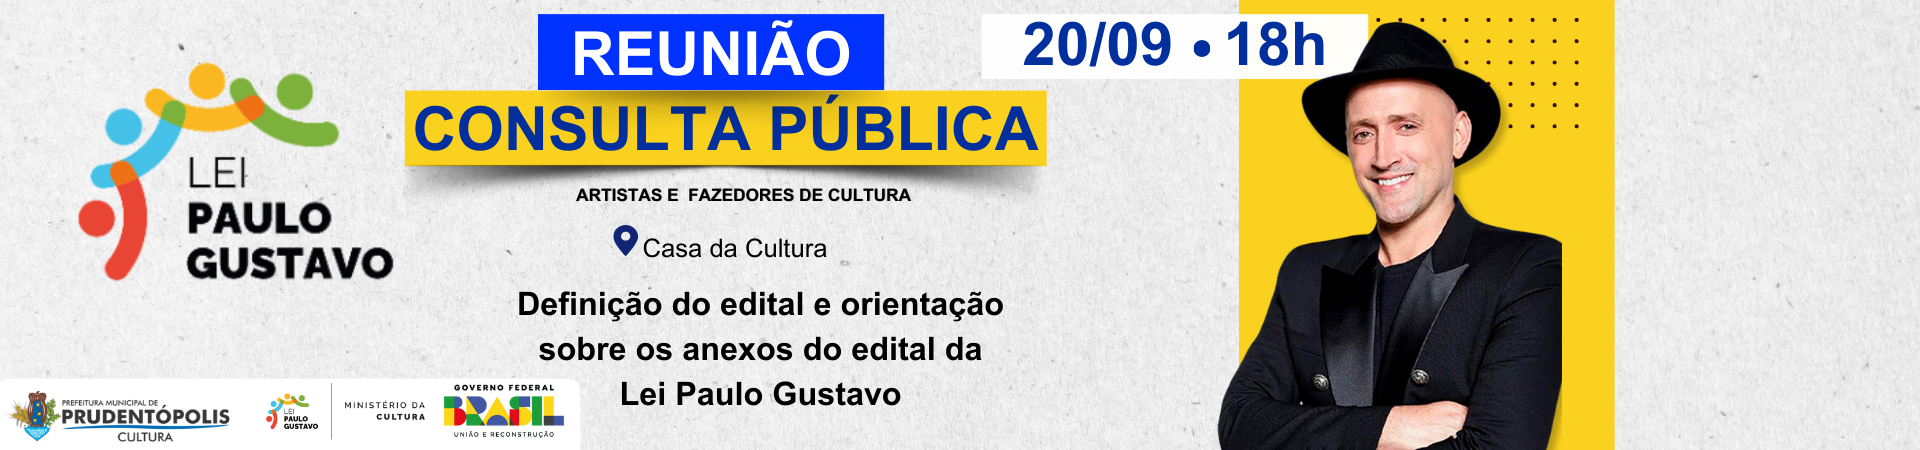 Reunião sobre edital Lei Paulo Gustavo